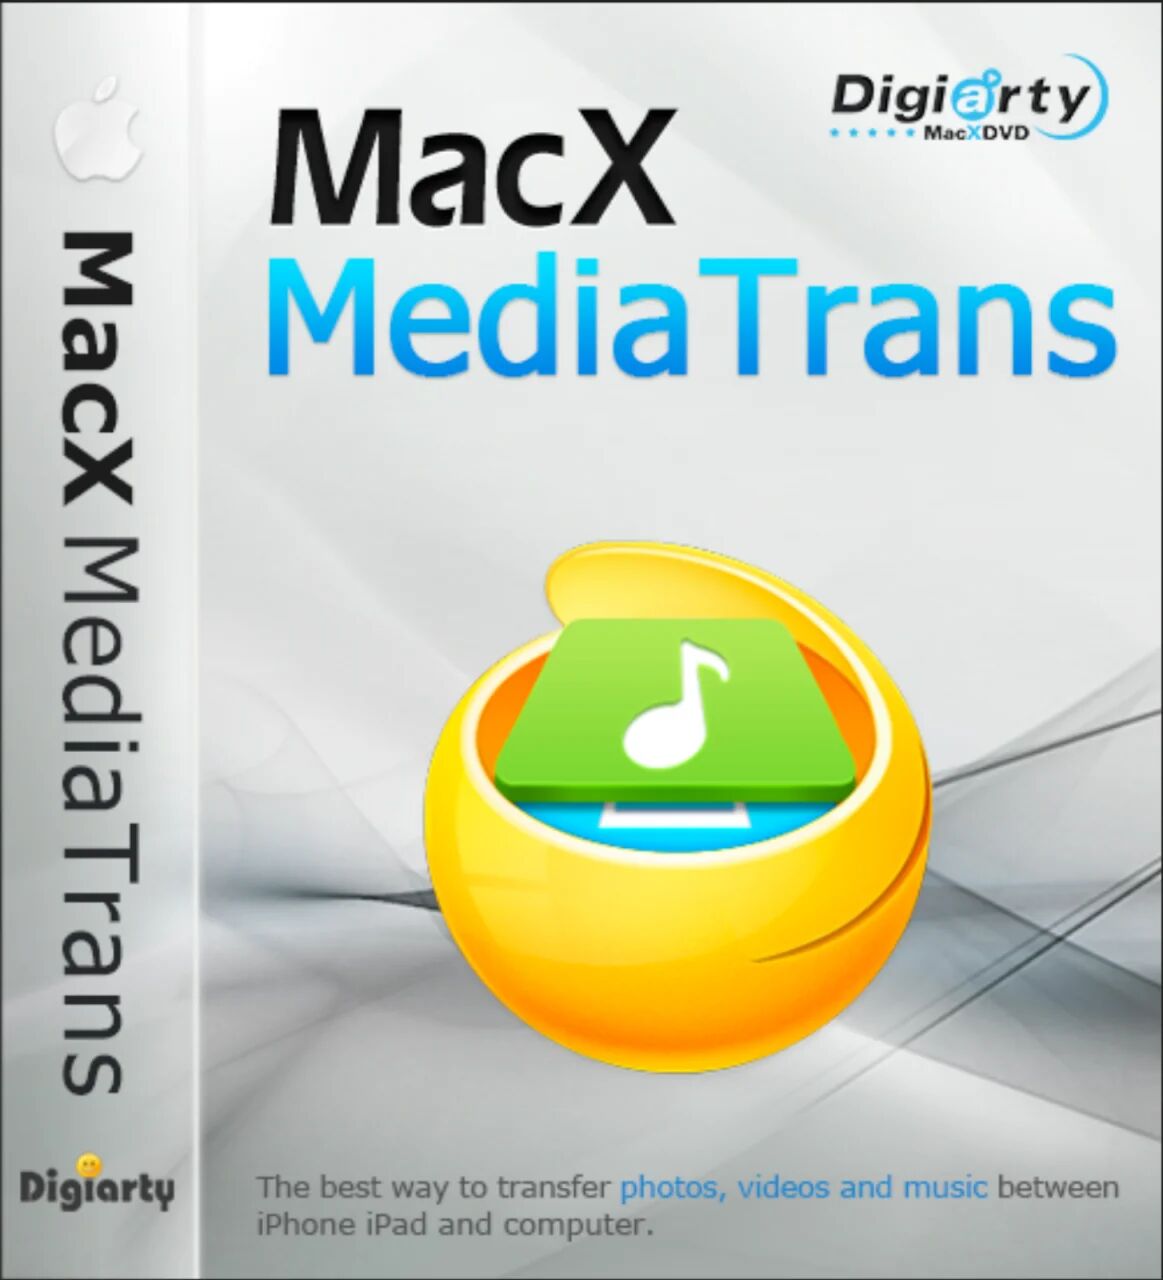 Digiarty MacX MediaTrans 1 An